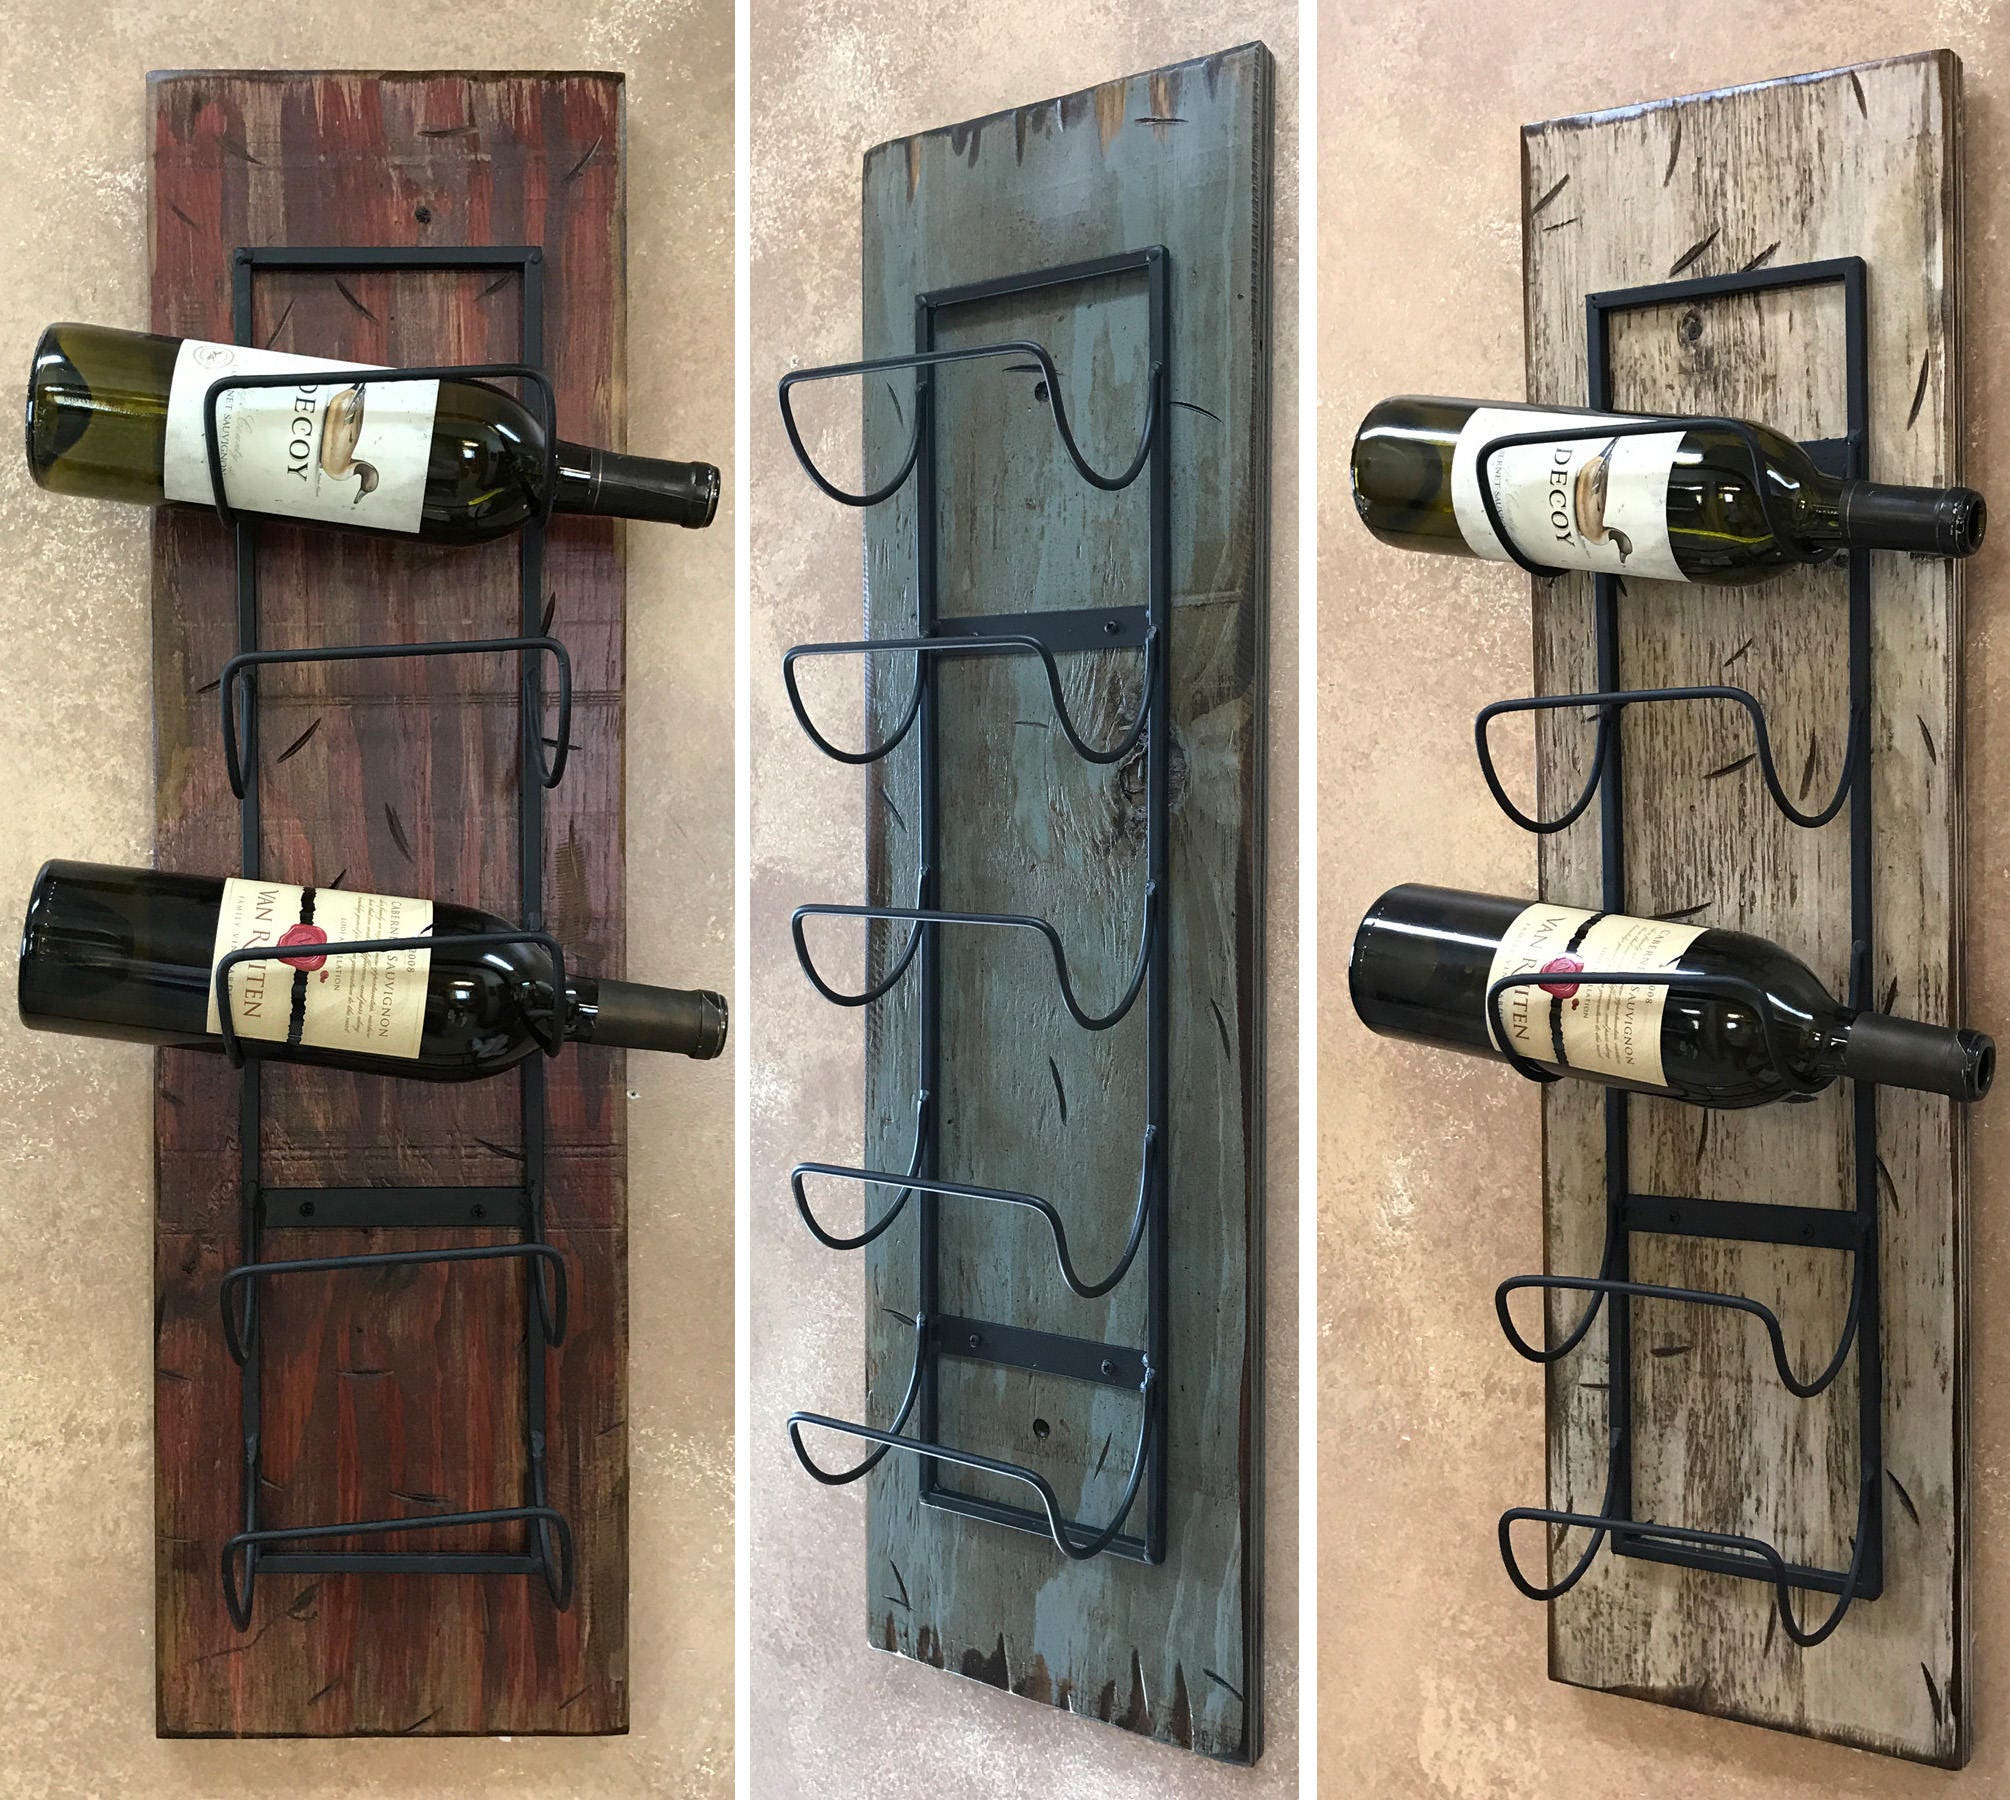 wall wine rack